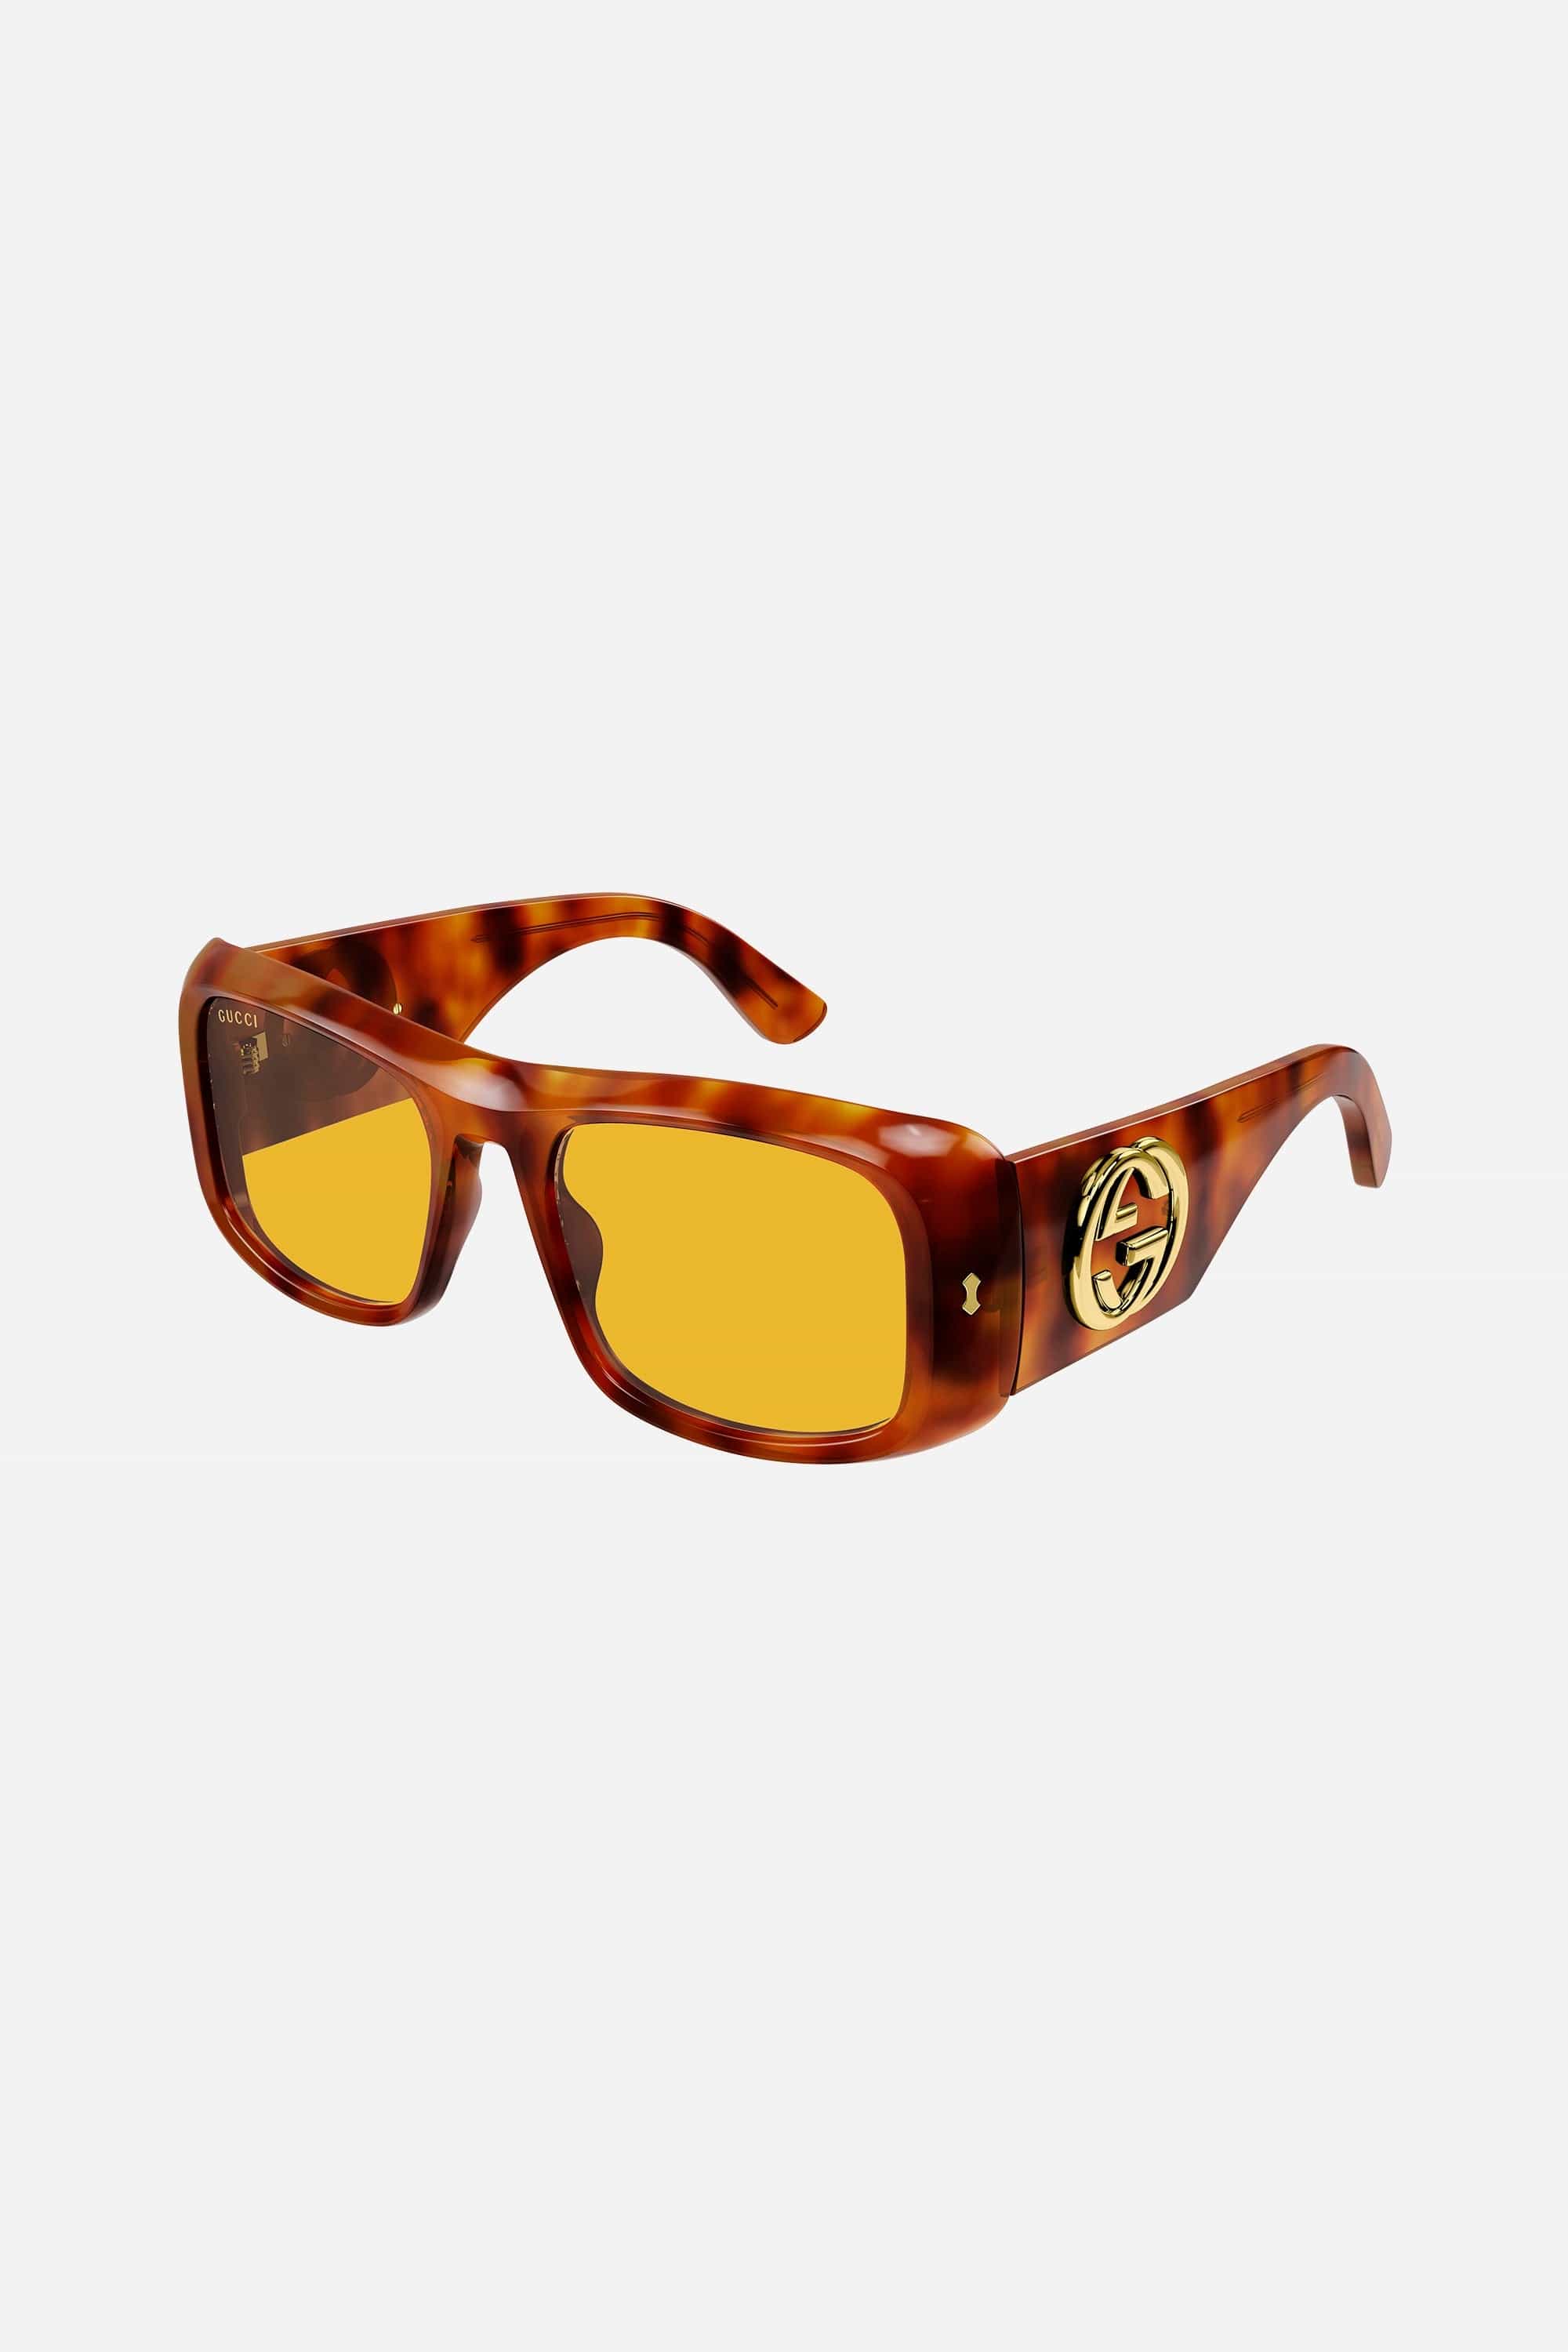 Gucci rectangular havana and yellow sunglasses - Eyewear Club